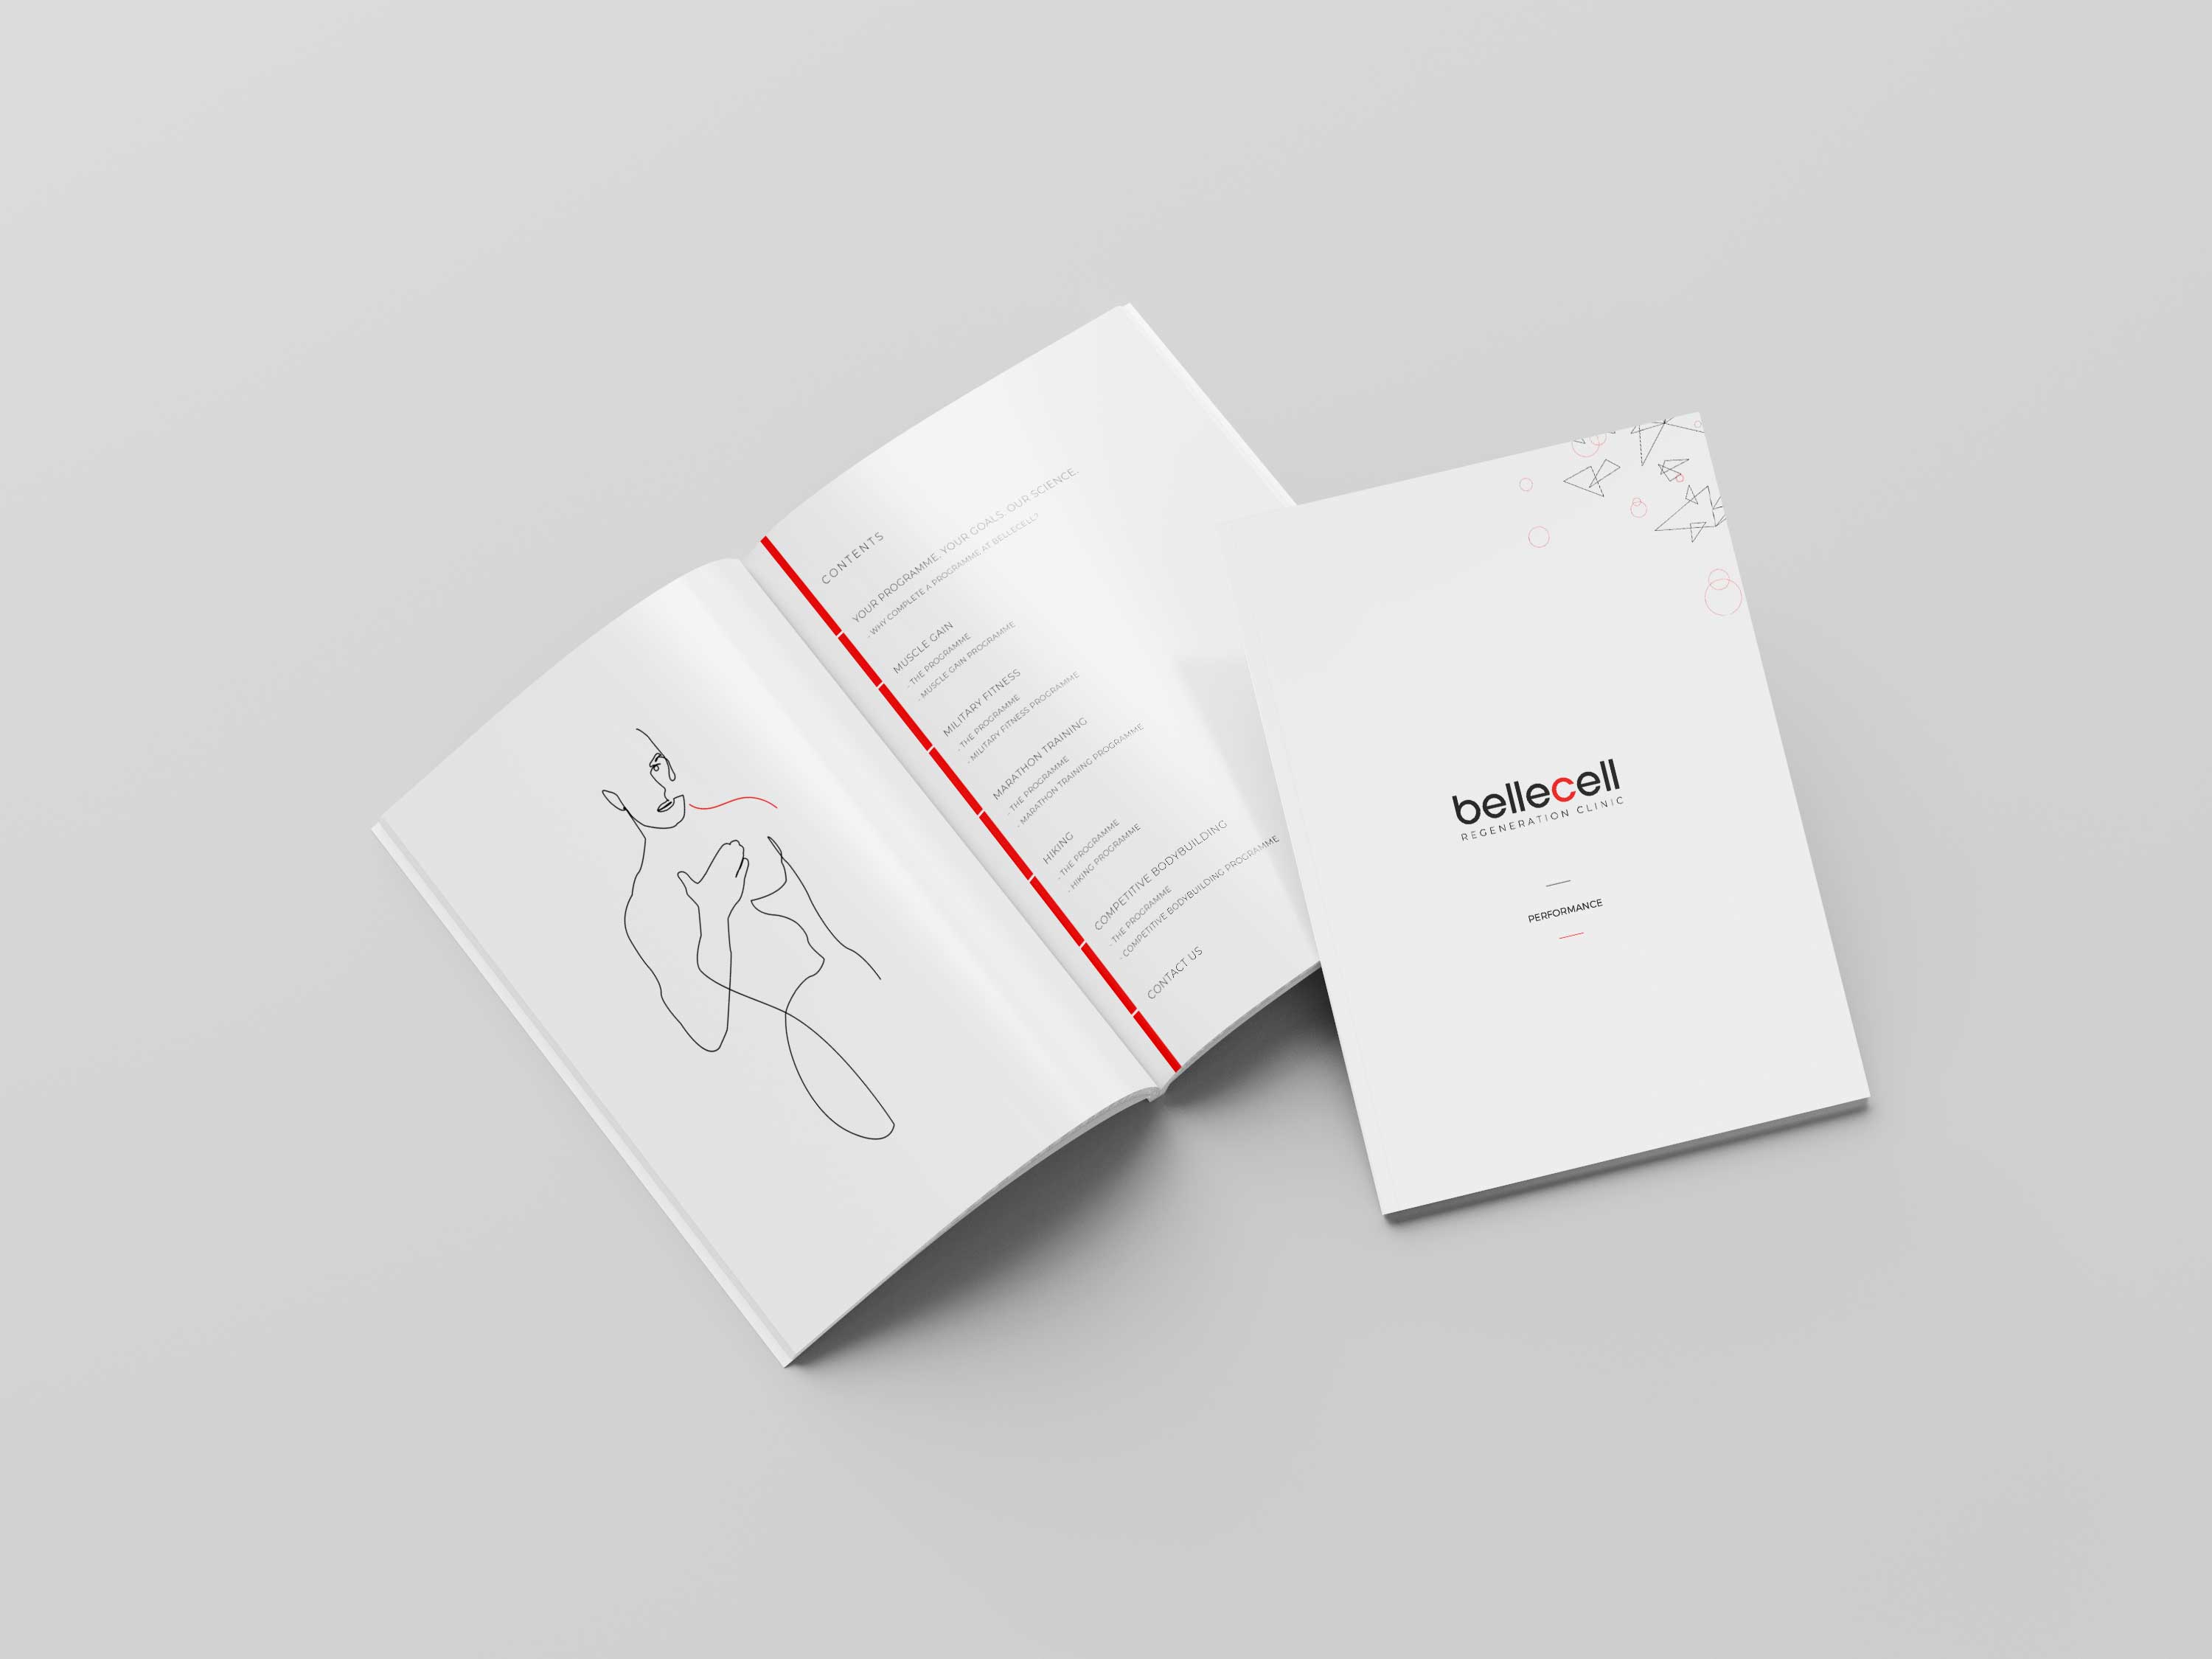 london bellcell brochure graphic design emanuele mandolfo branding brand identity